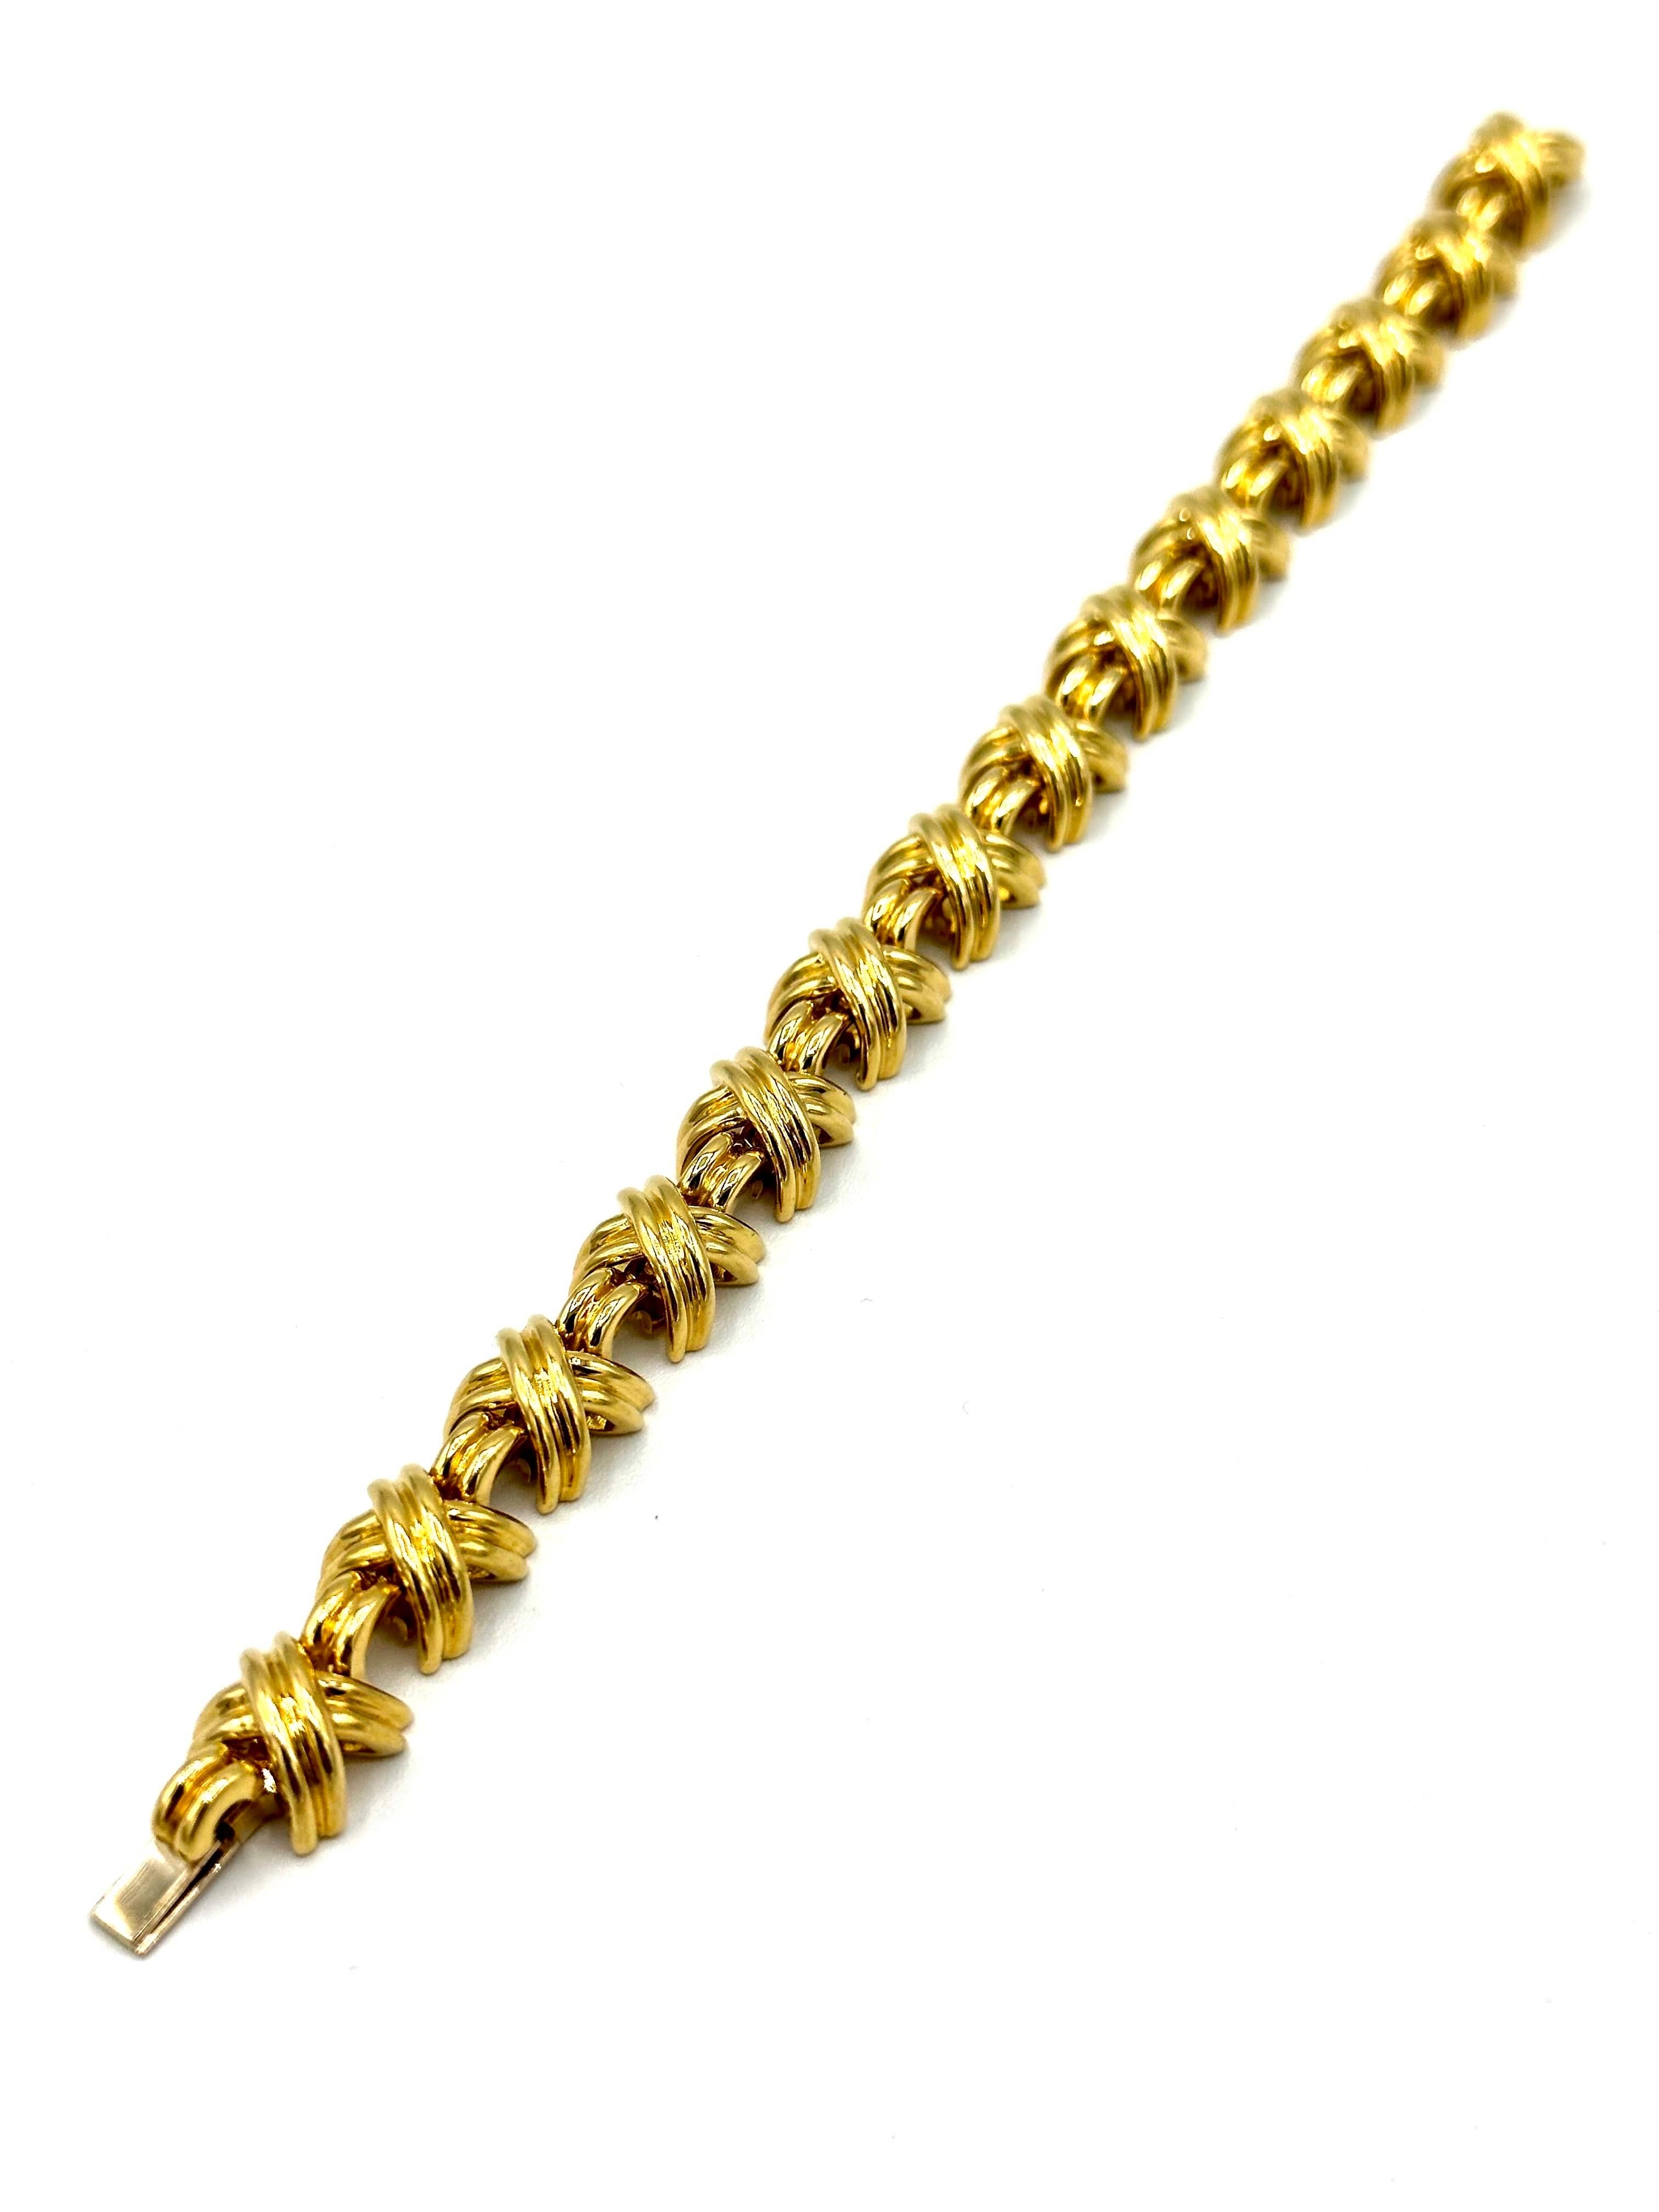 tiffany x bracelet gold